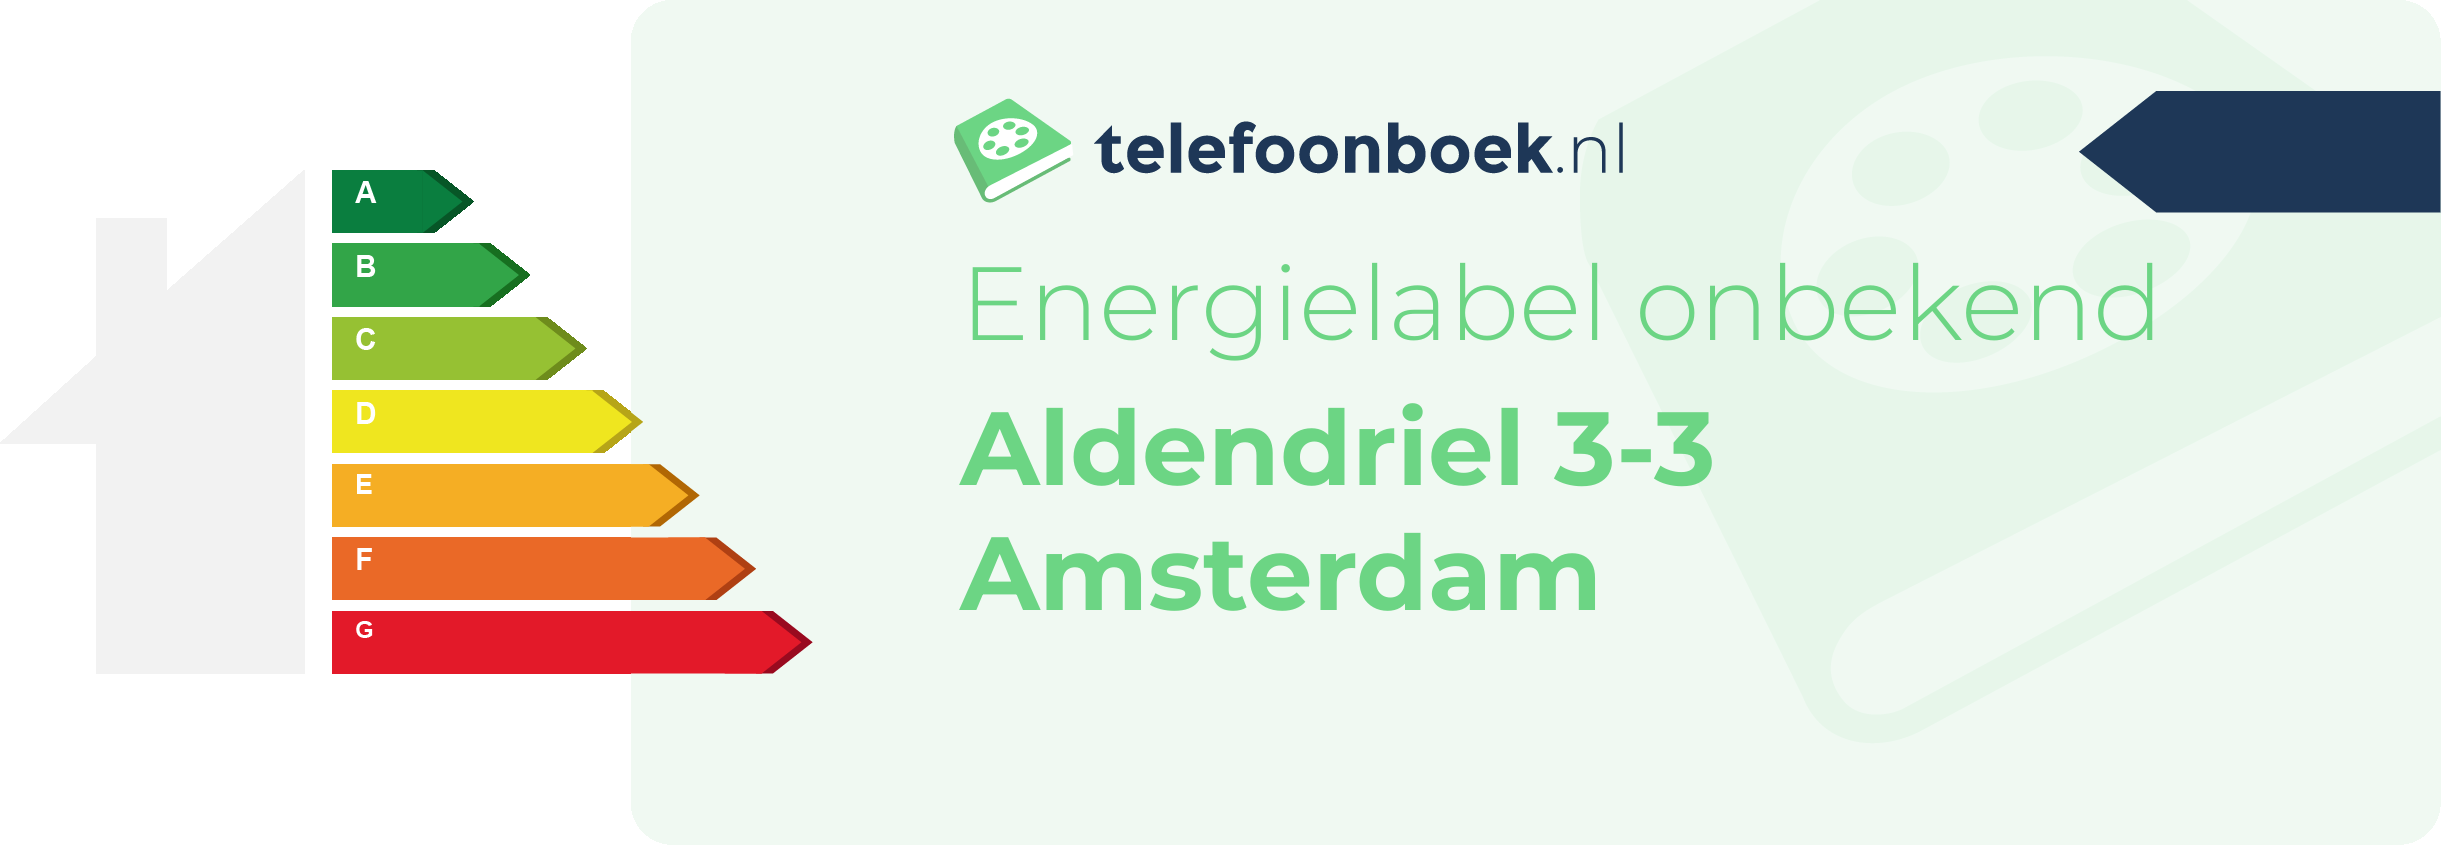 Energielabel Aldendriel 3-3 Amsterdam